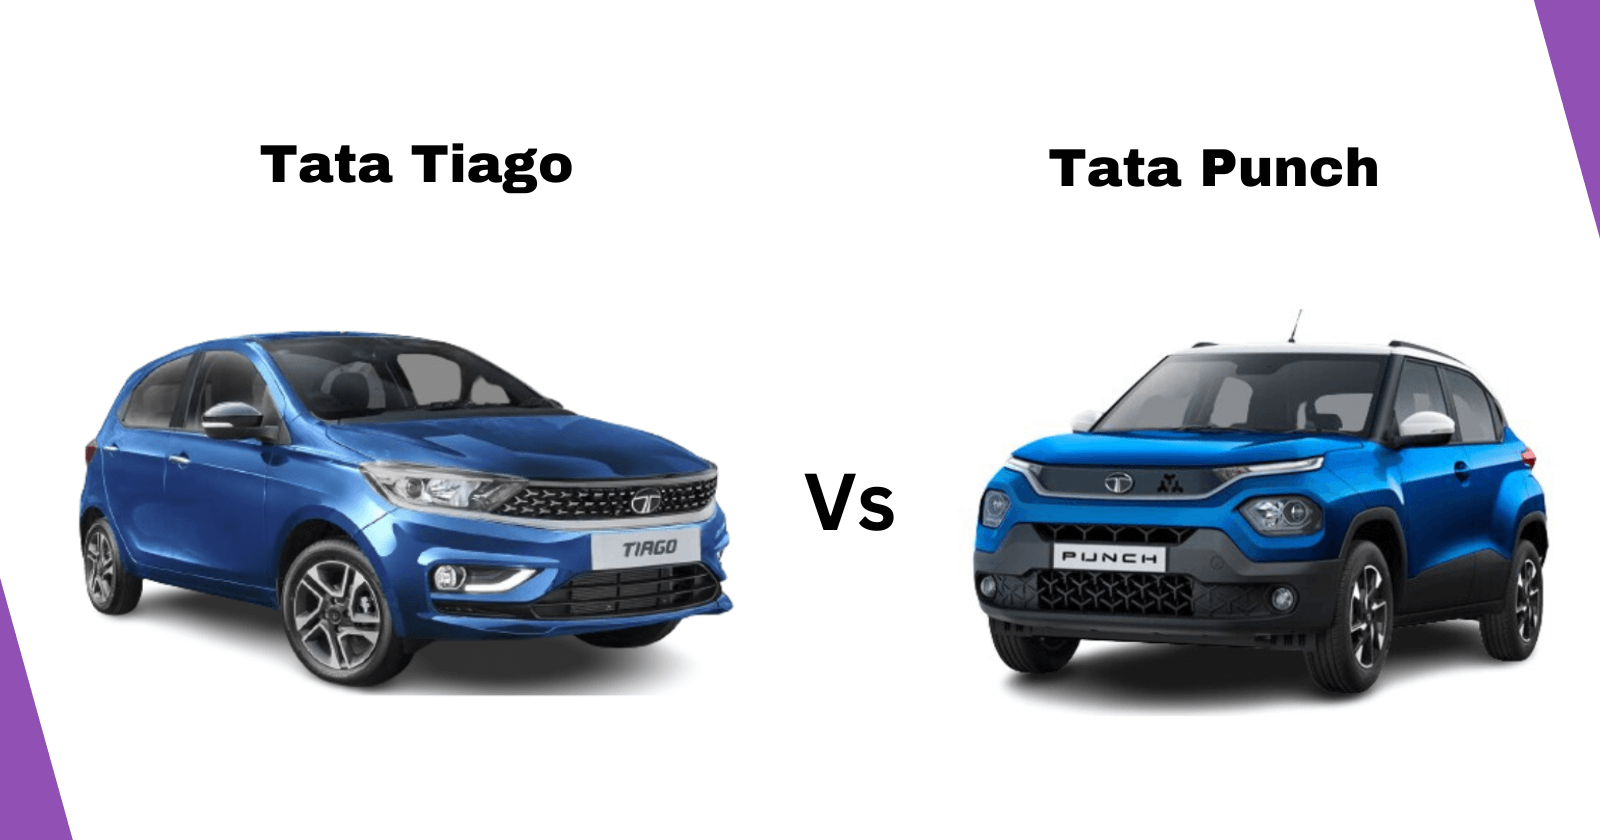 Tata Tiago vs Tata Punch